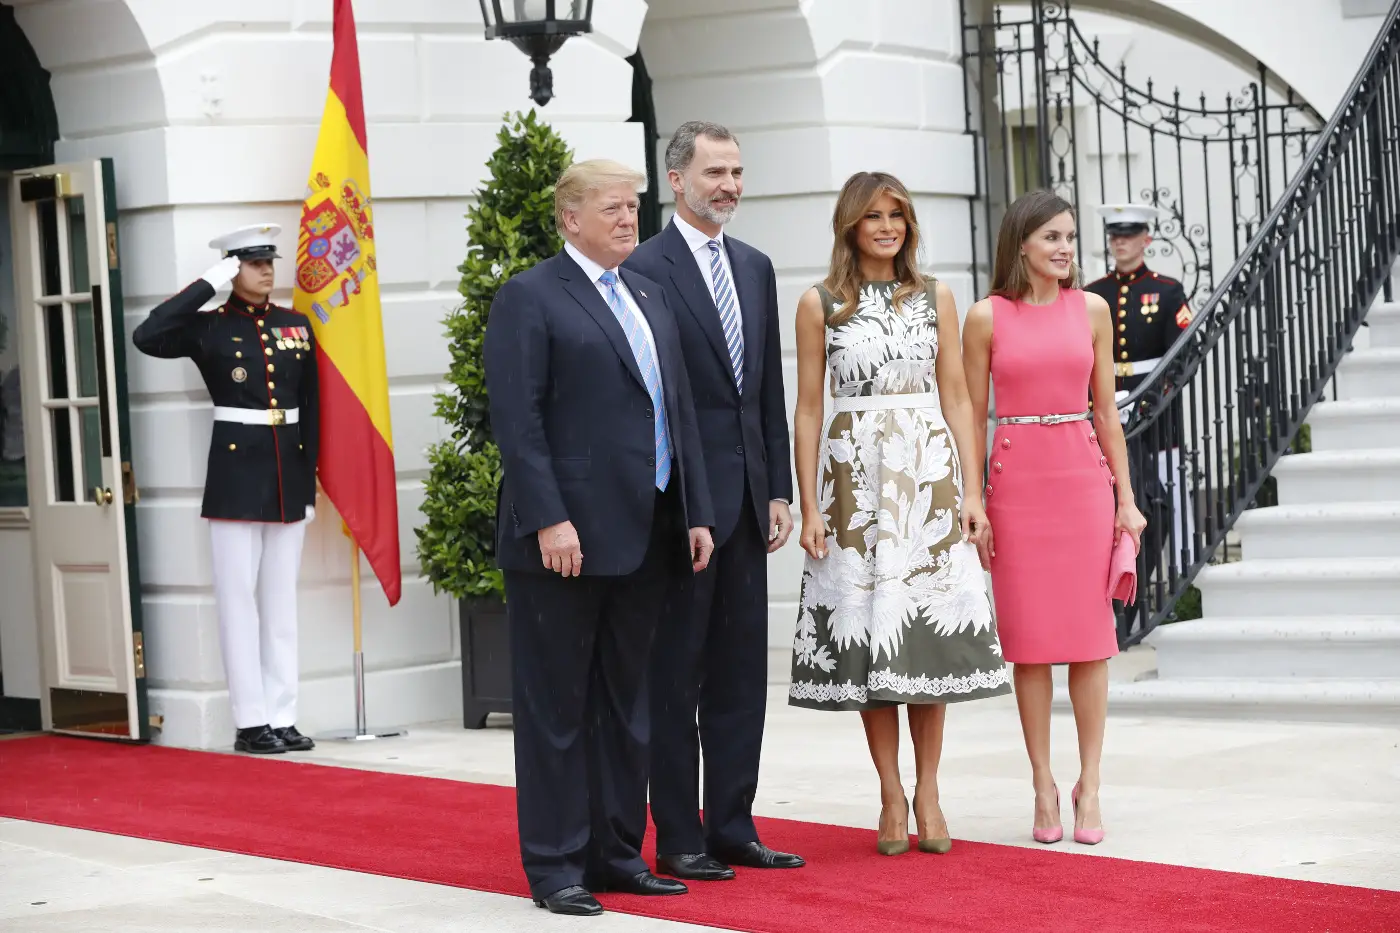 King Felipe and Queen Letizia in Washington with Donald Trump and Melania Trump